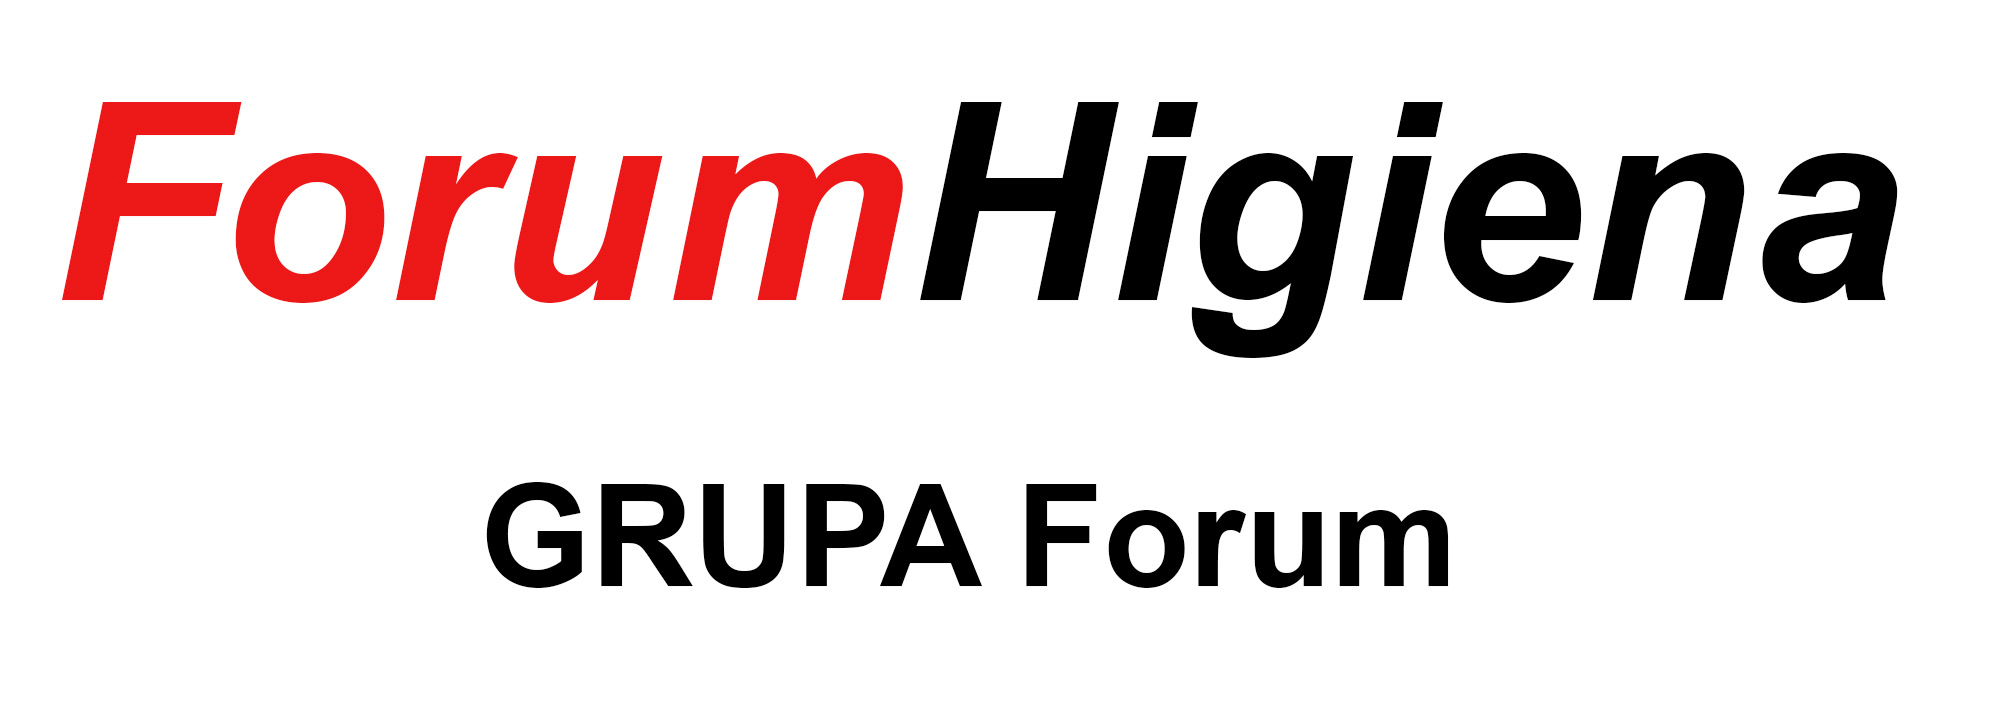 Sklep Forum Higiena